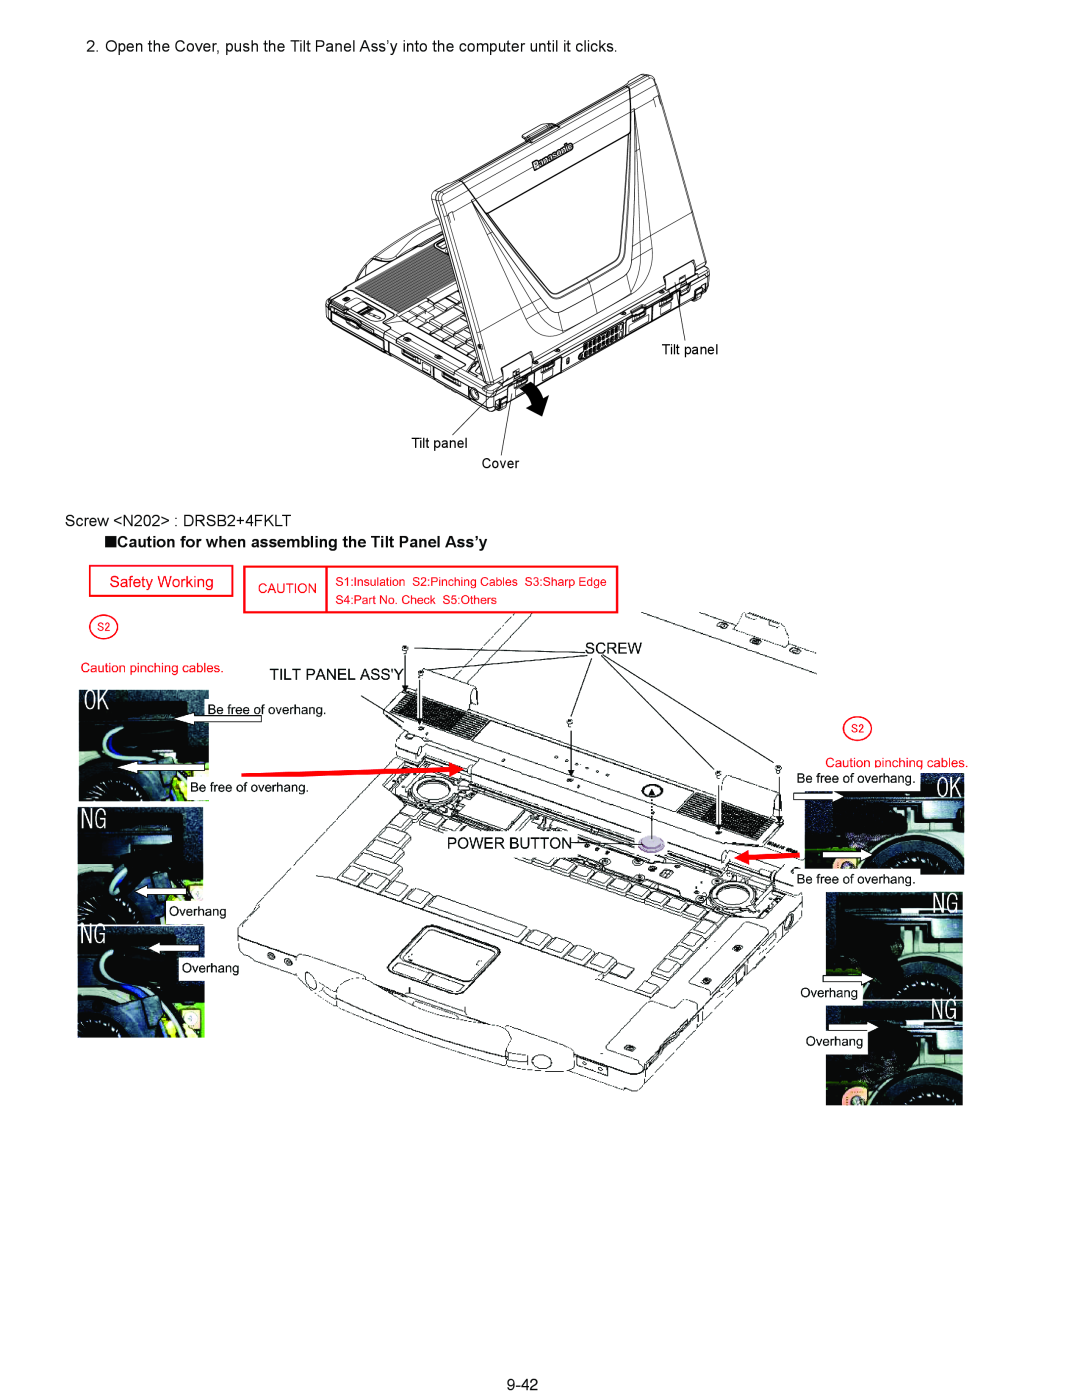 Panasonic CF-52EKM 1 D 2 M service manual Screw N202 DRSB2+4FKLT, Caution for when assembling the Tilt Panel Ass’y, 9-42 